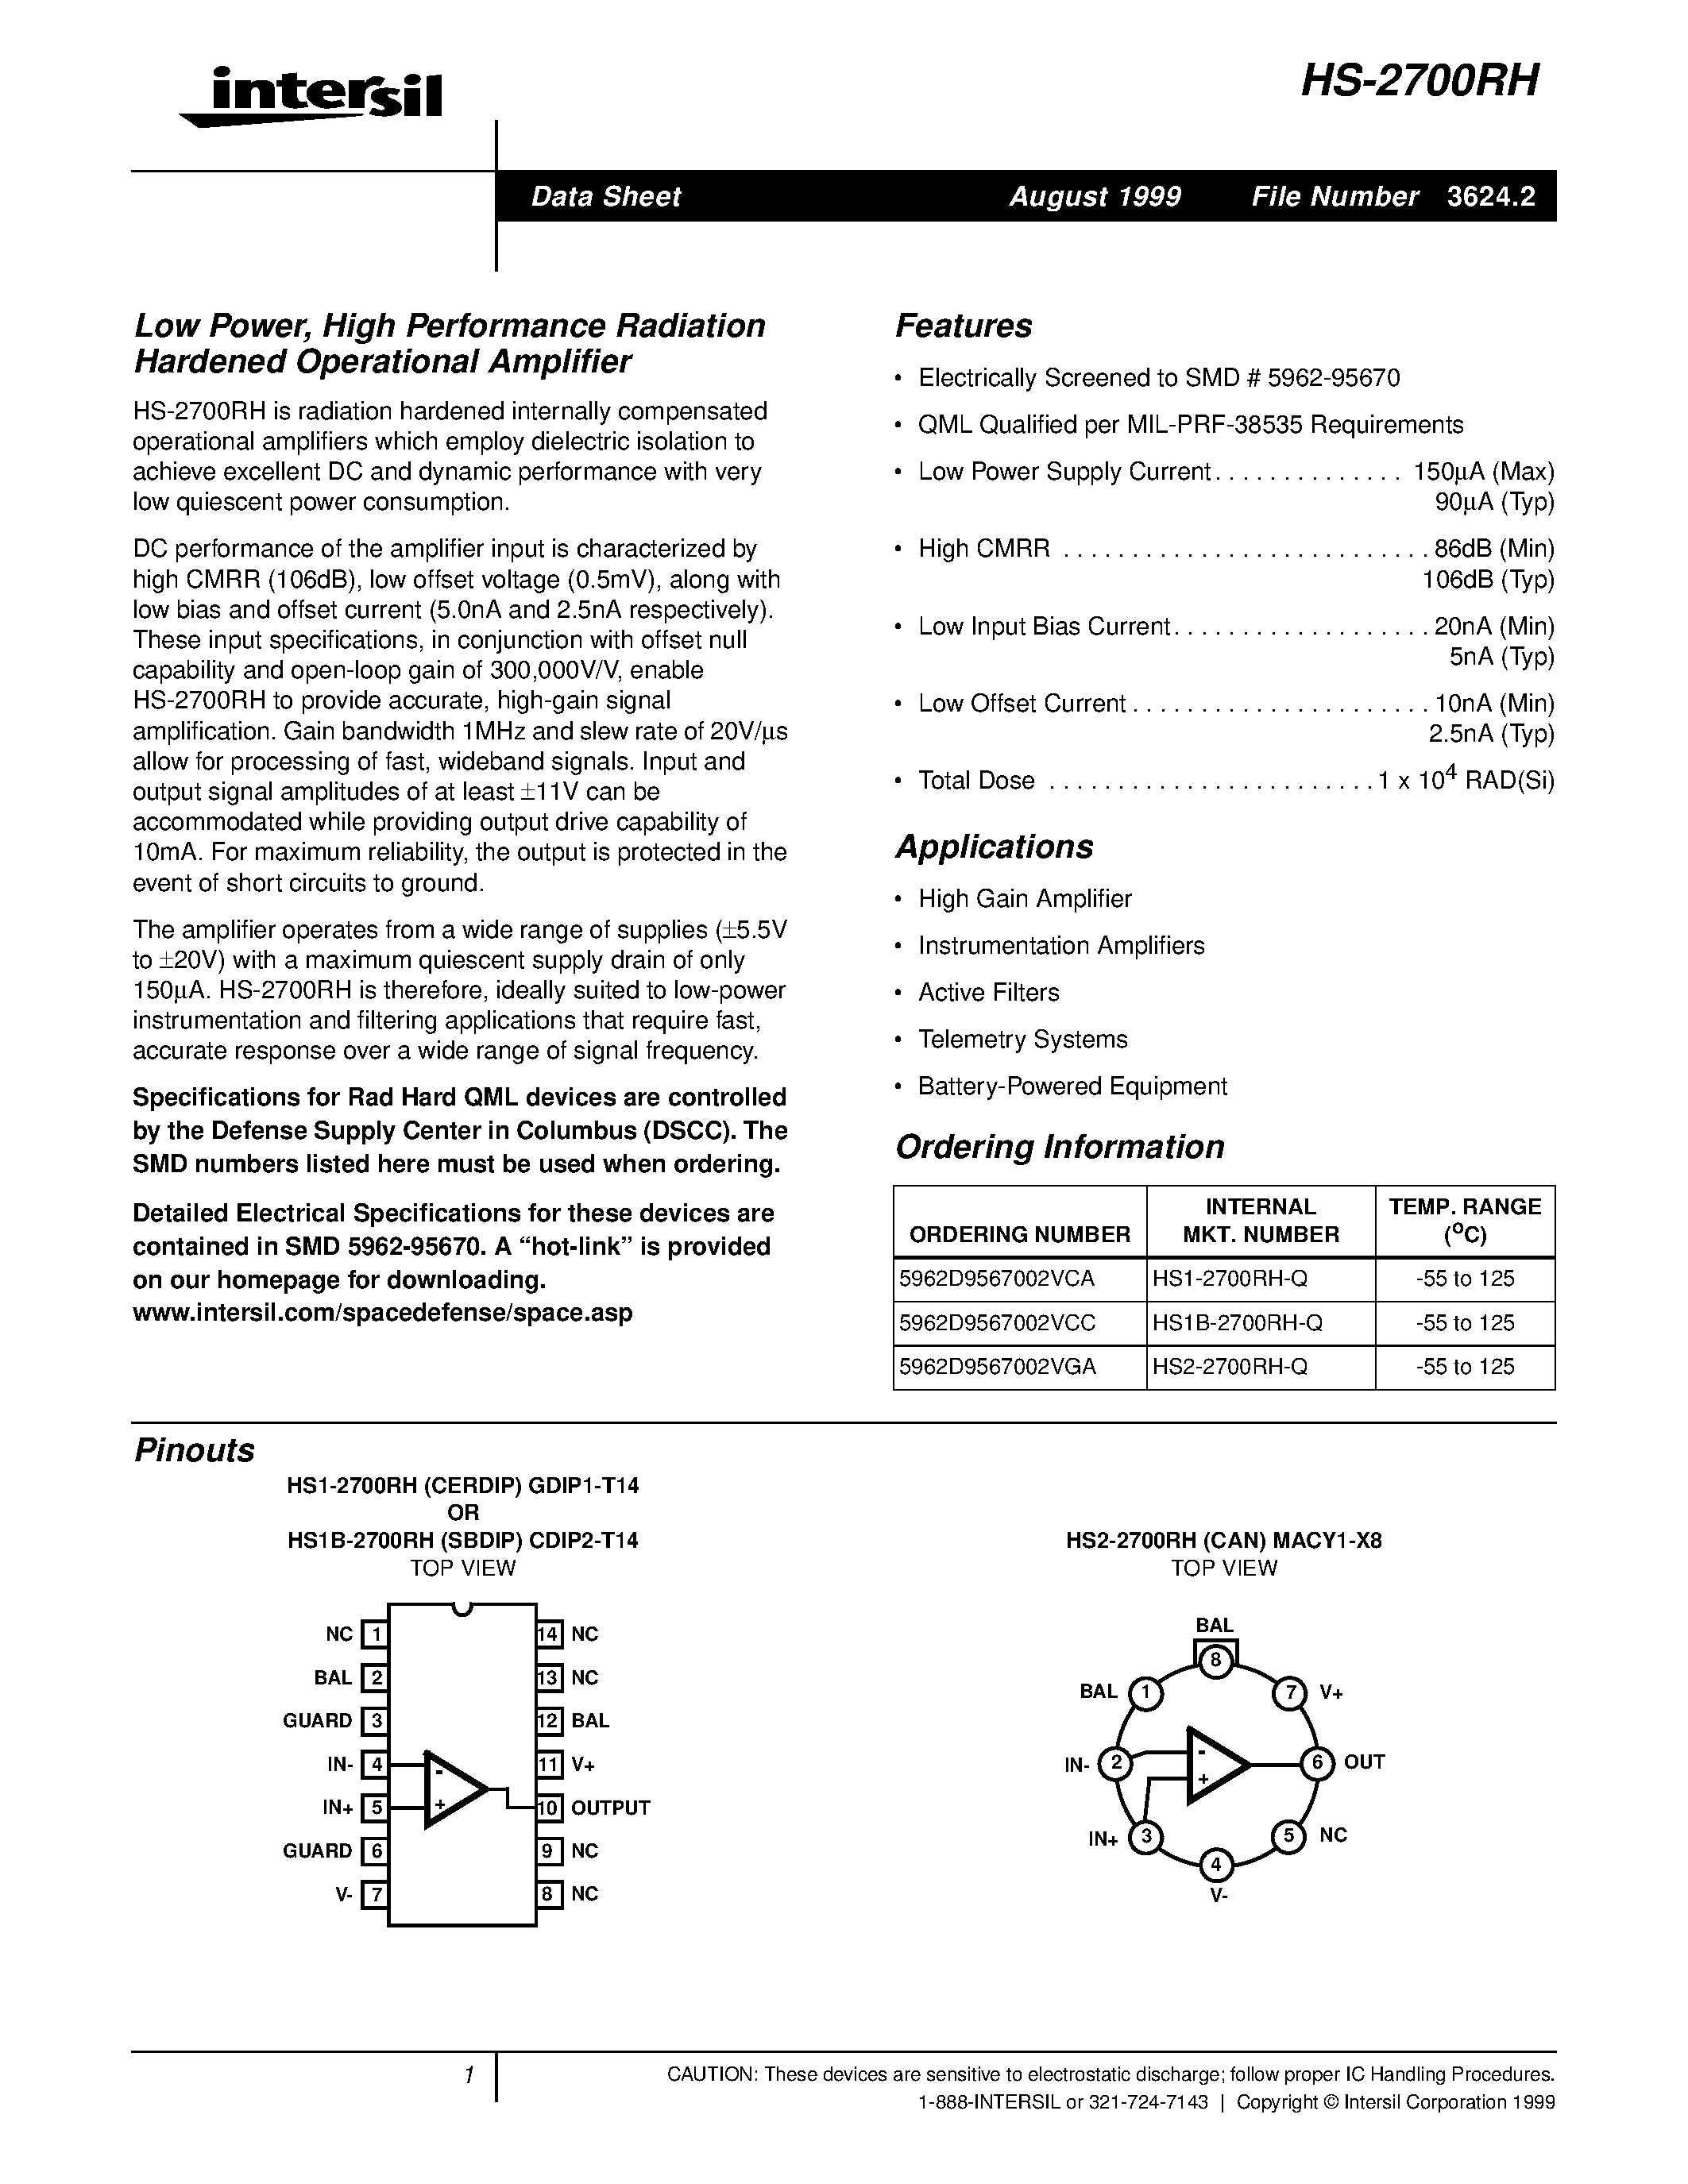 Даташит HS2-2700RH-Q - Low Power/ High Performance Radiation Hardened Operational Amplifier страница 1